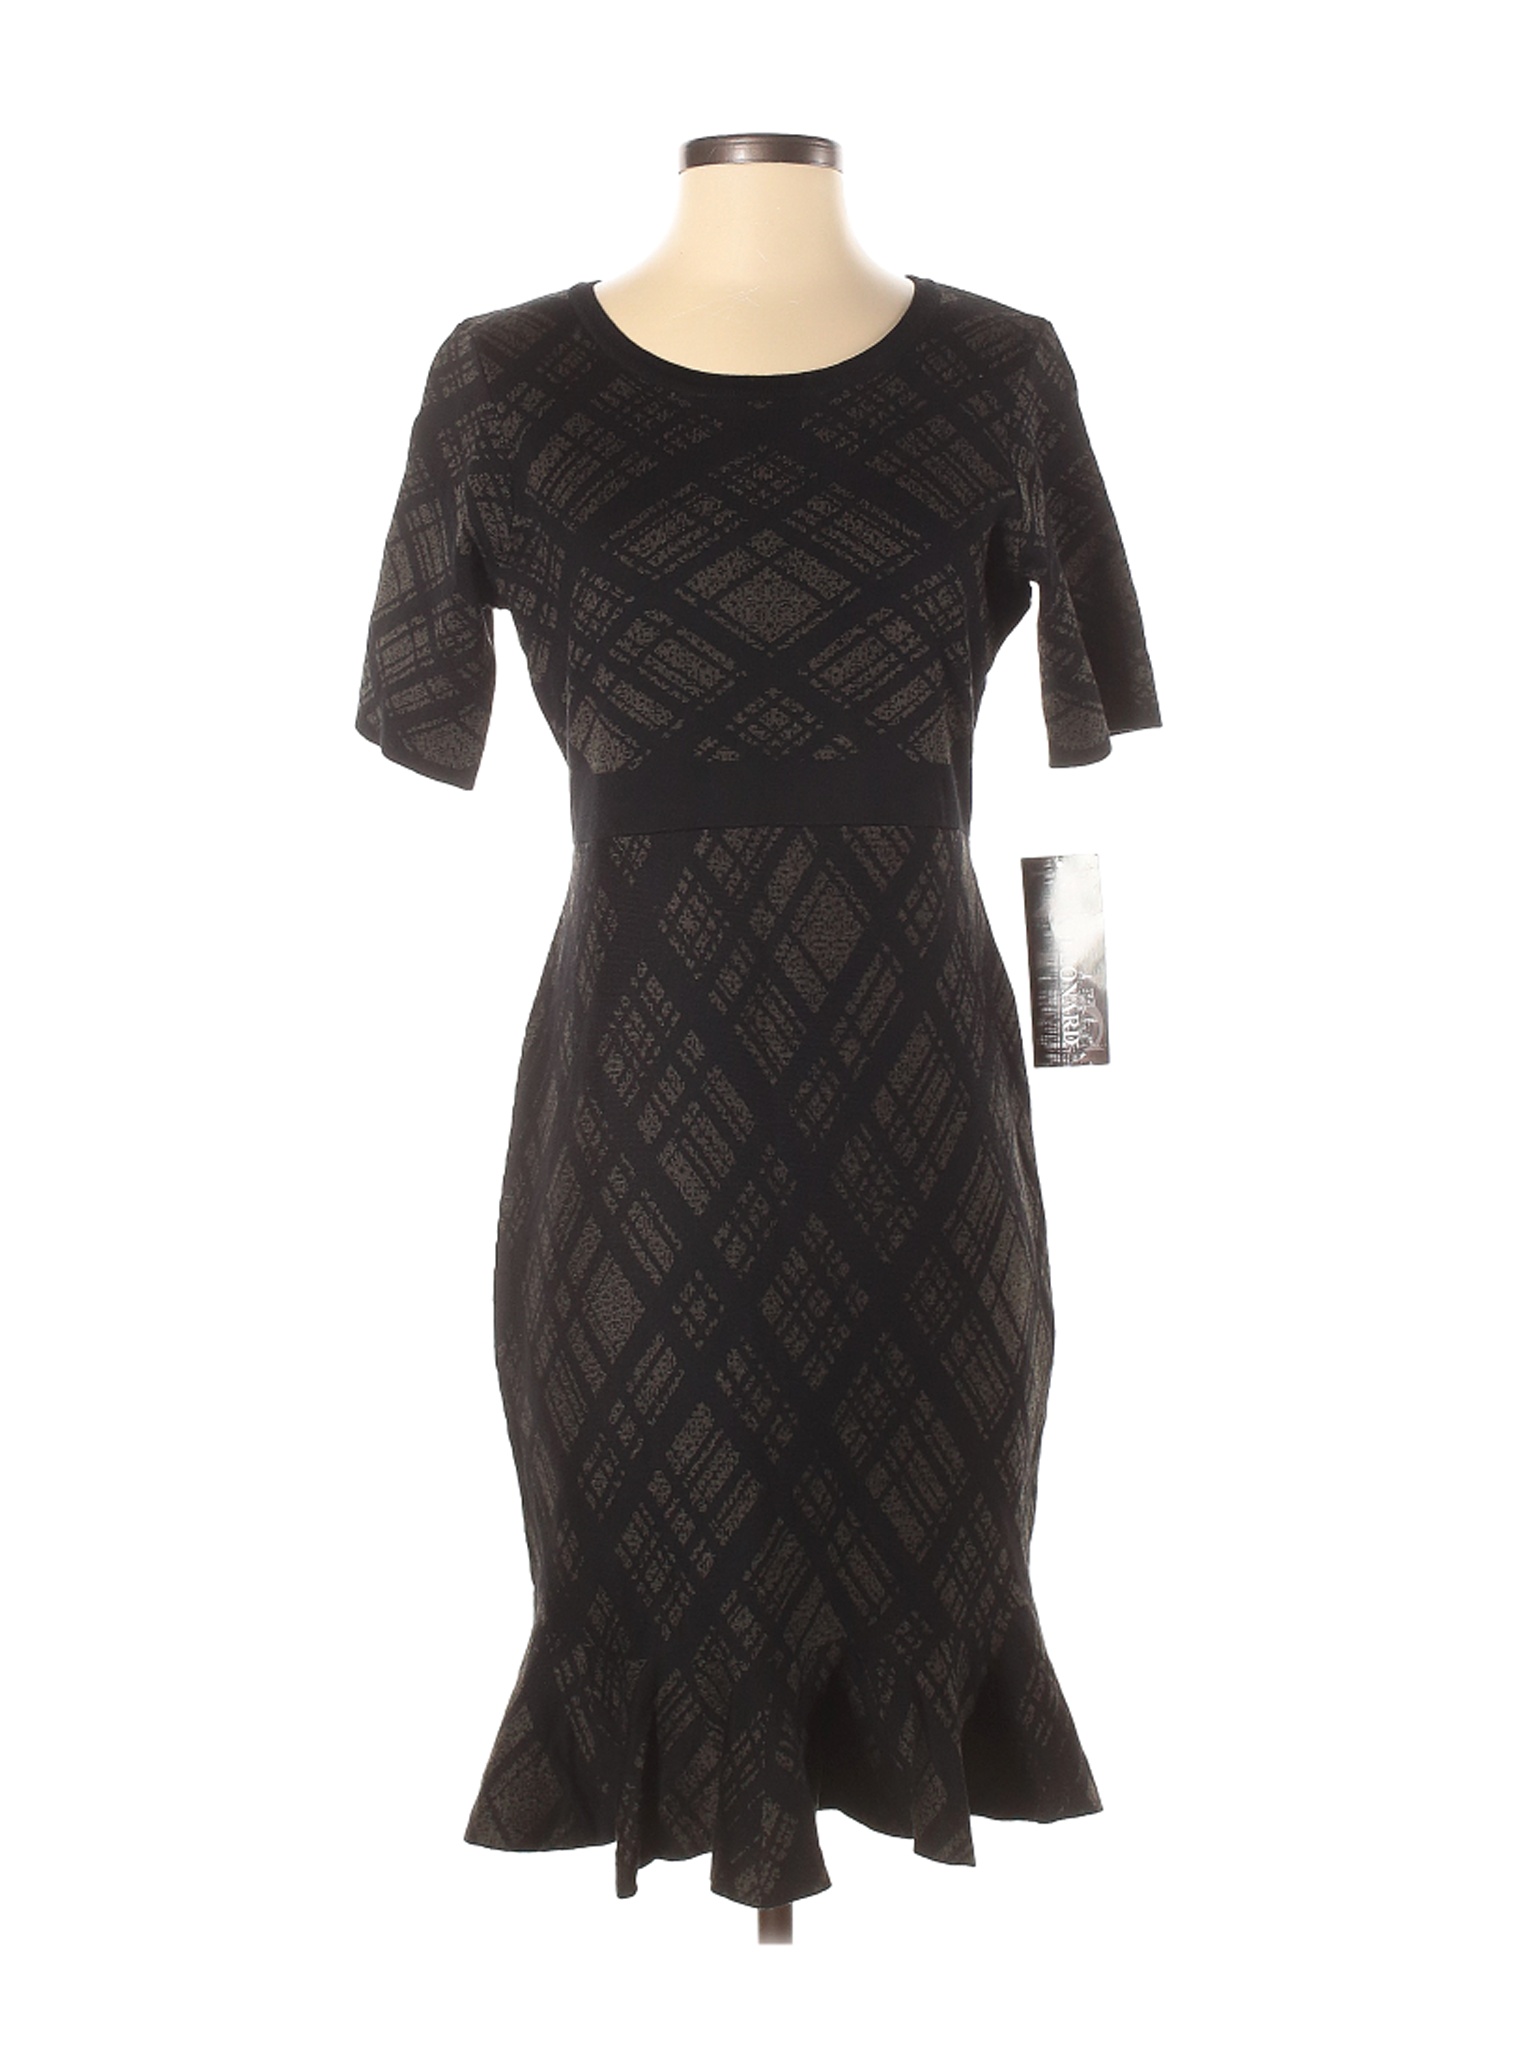 NWT Nina Leonard Women Black Casual Dress S | eBay